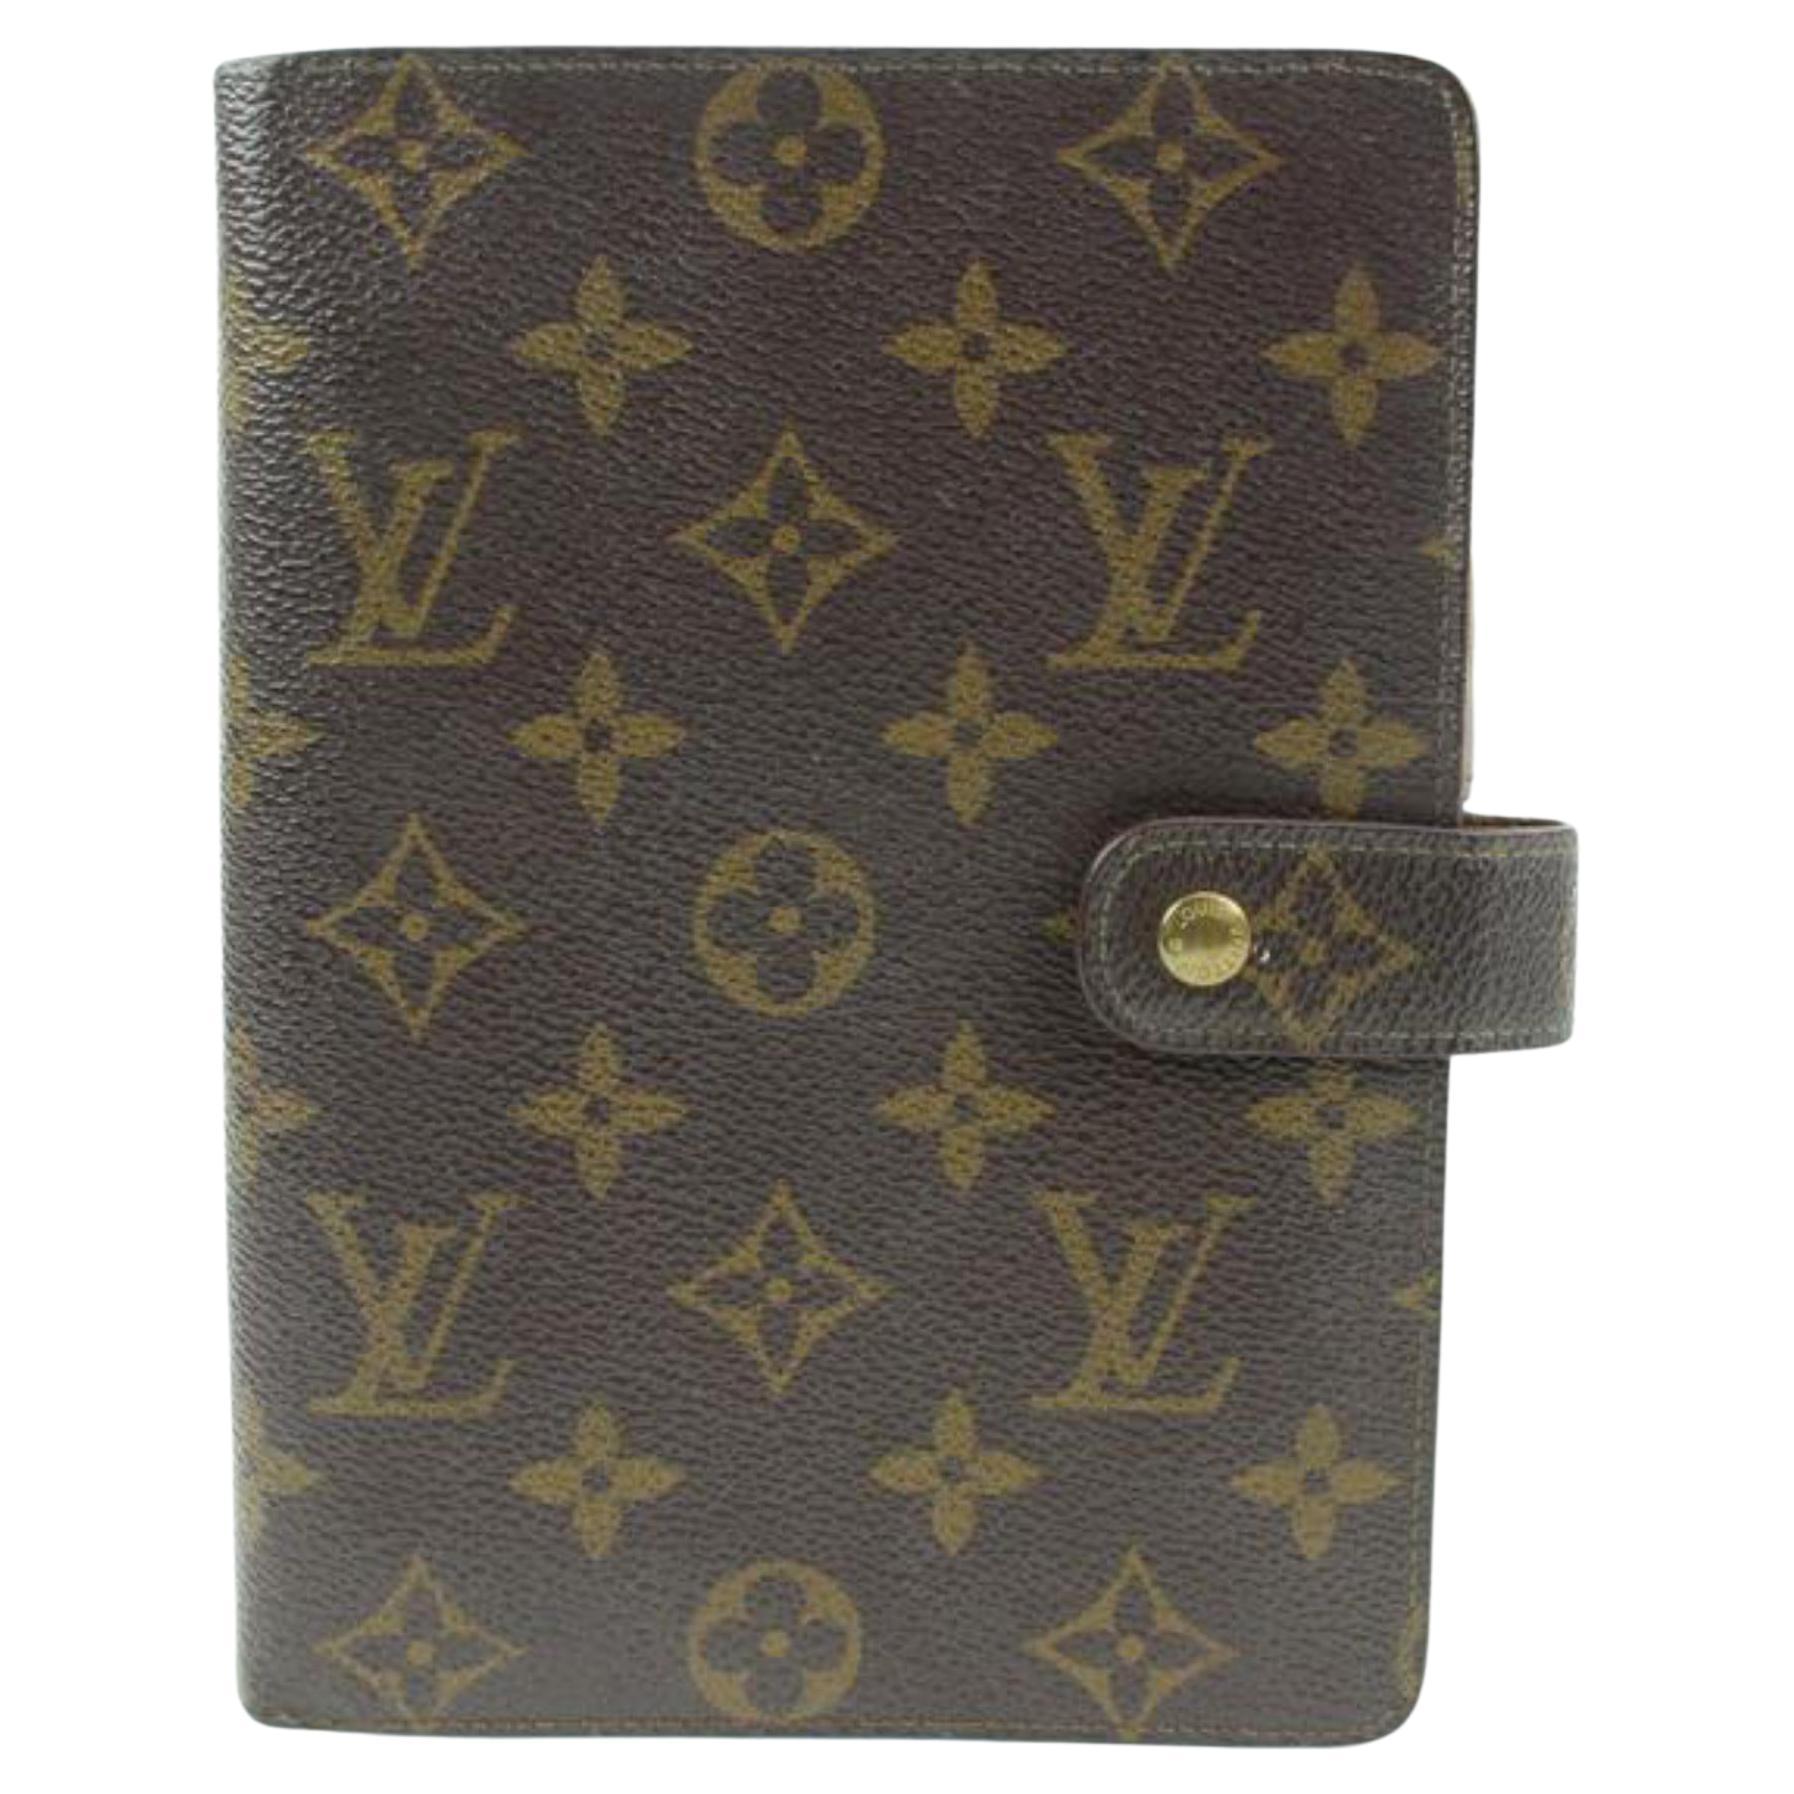 Agenda Louis Vuitton Monogram MM Diary Planner Cover s28lv14 en vente